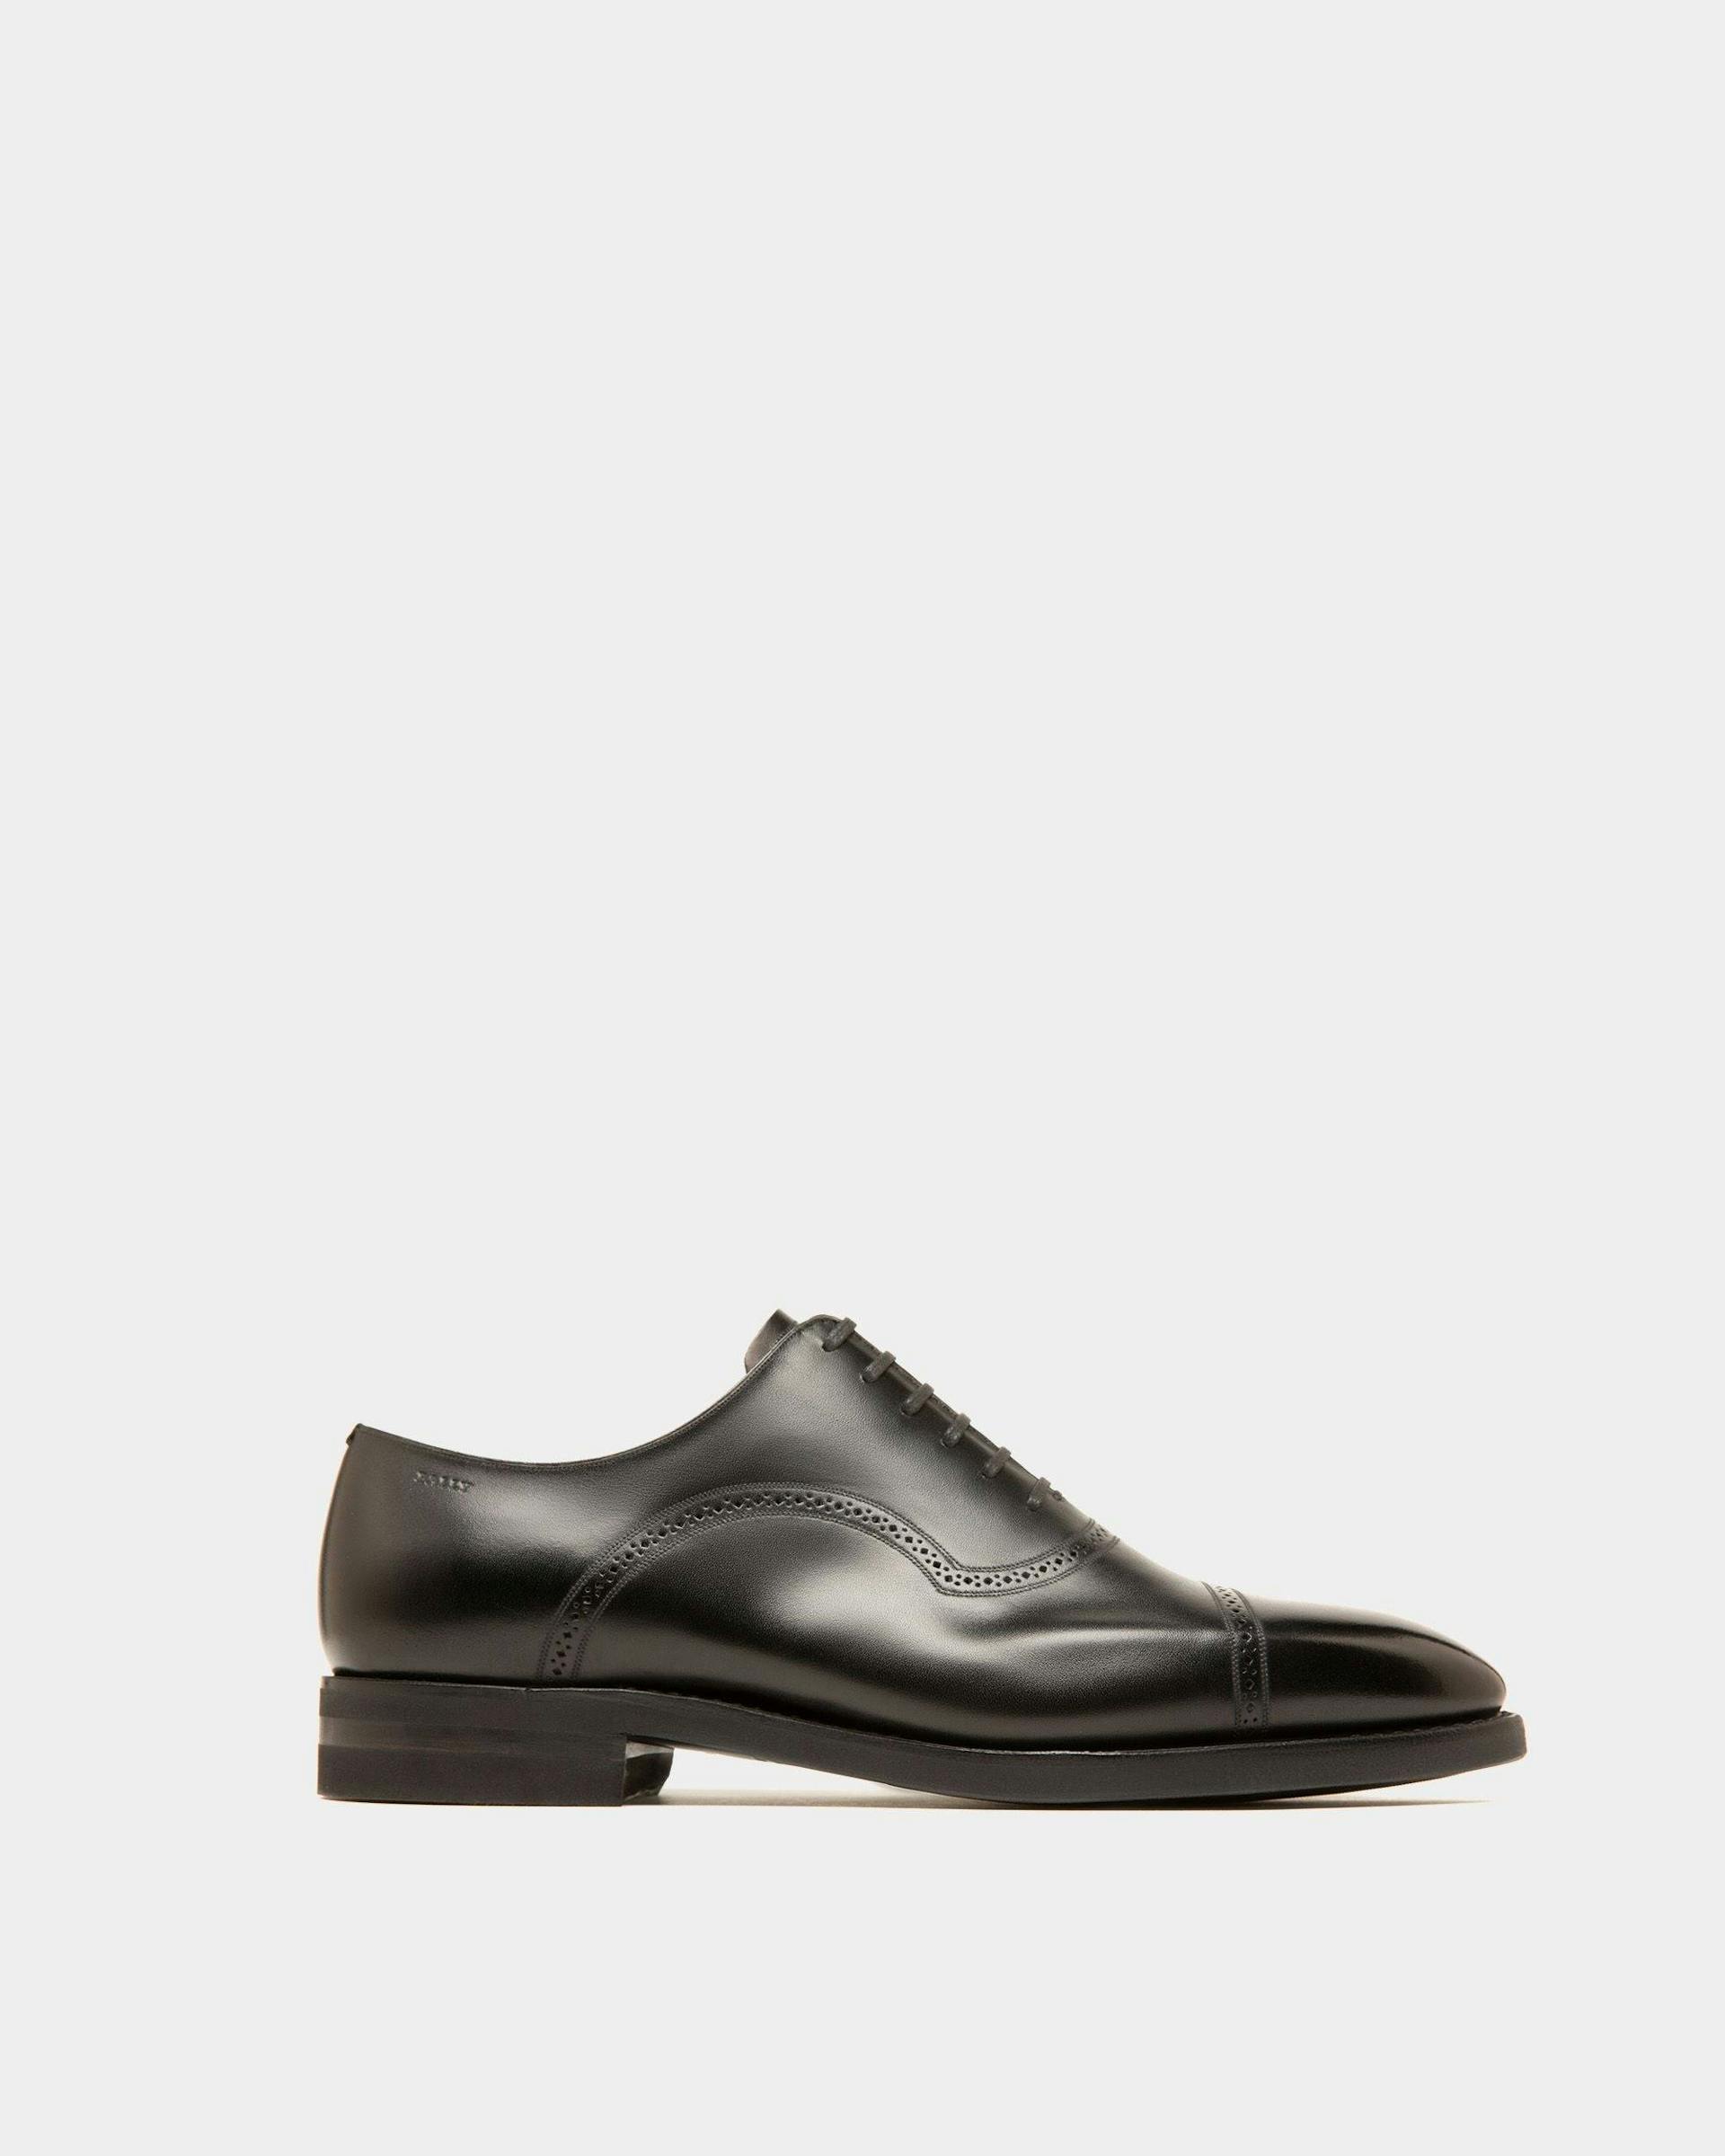 Scribe Novo Oxford Shoes In Black Leather - Men's - Bally - 01